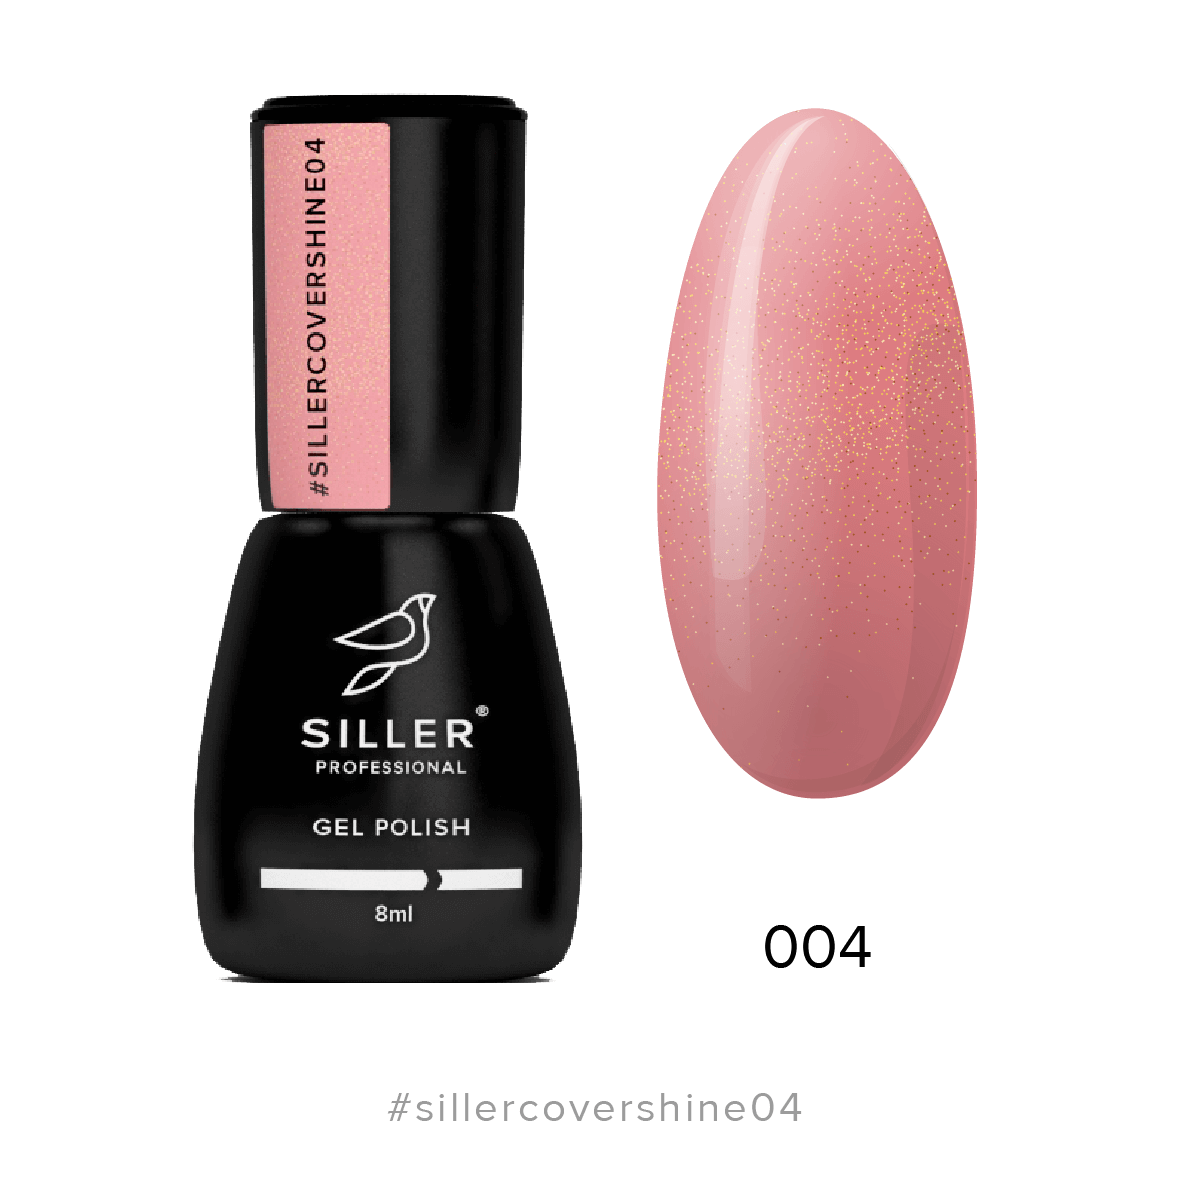 Siller Cover Base Shine #4 - Pink